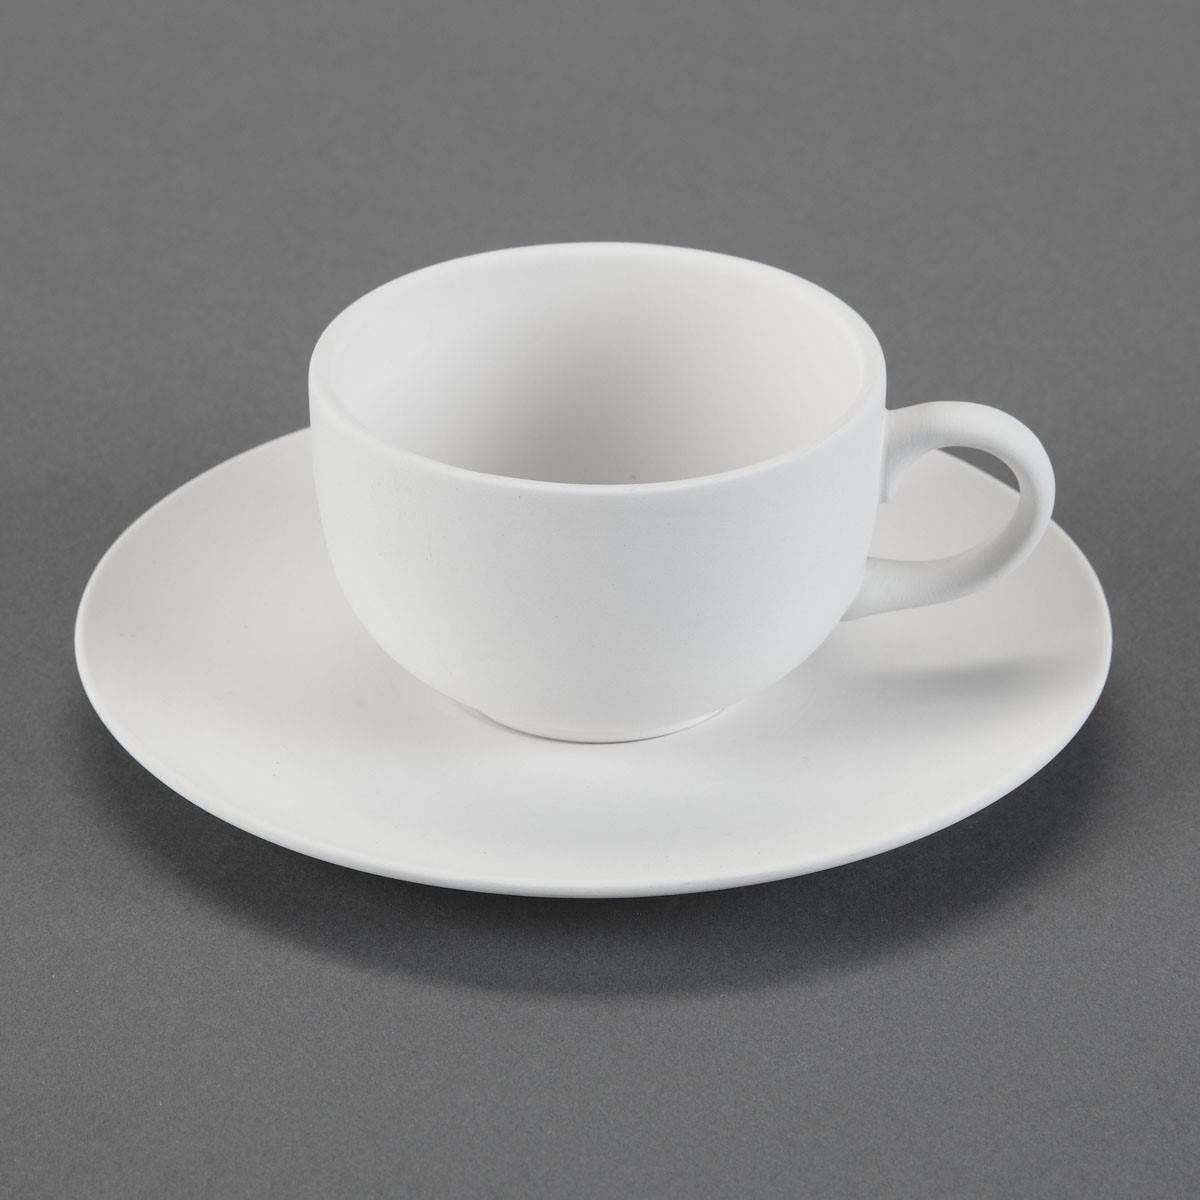 https://evansceramics.com/wp-content/uploads/2018/09/bq-teacup-and-saucer.jpg